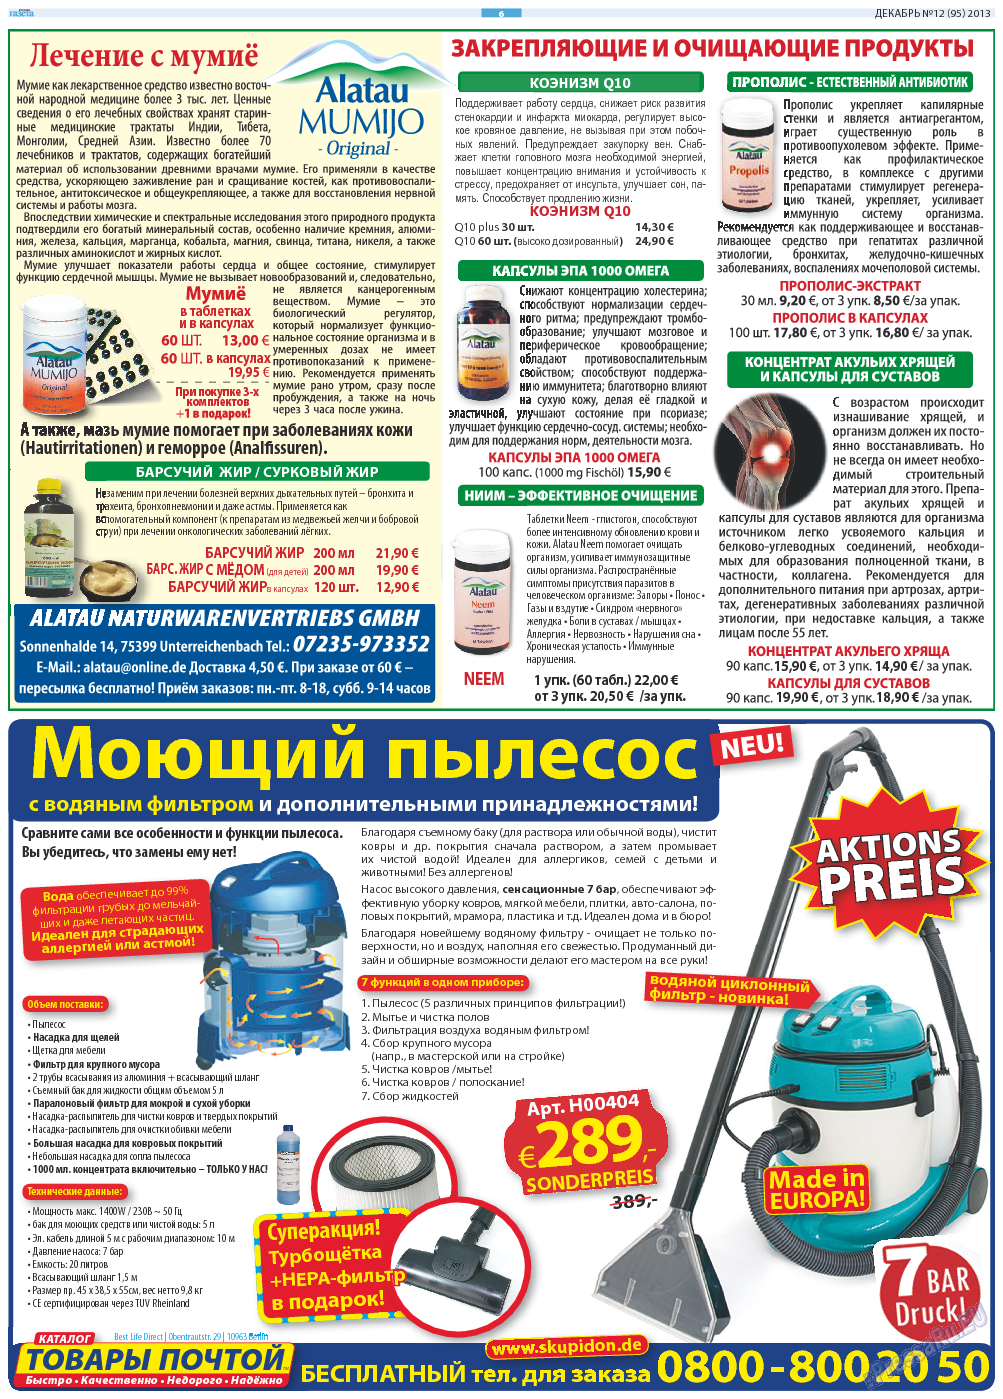 Русская Газета, газета. 2013 №12 стр.6